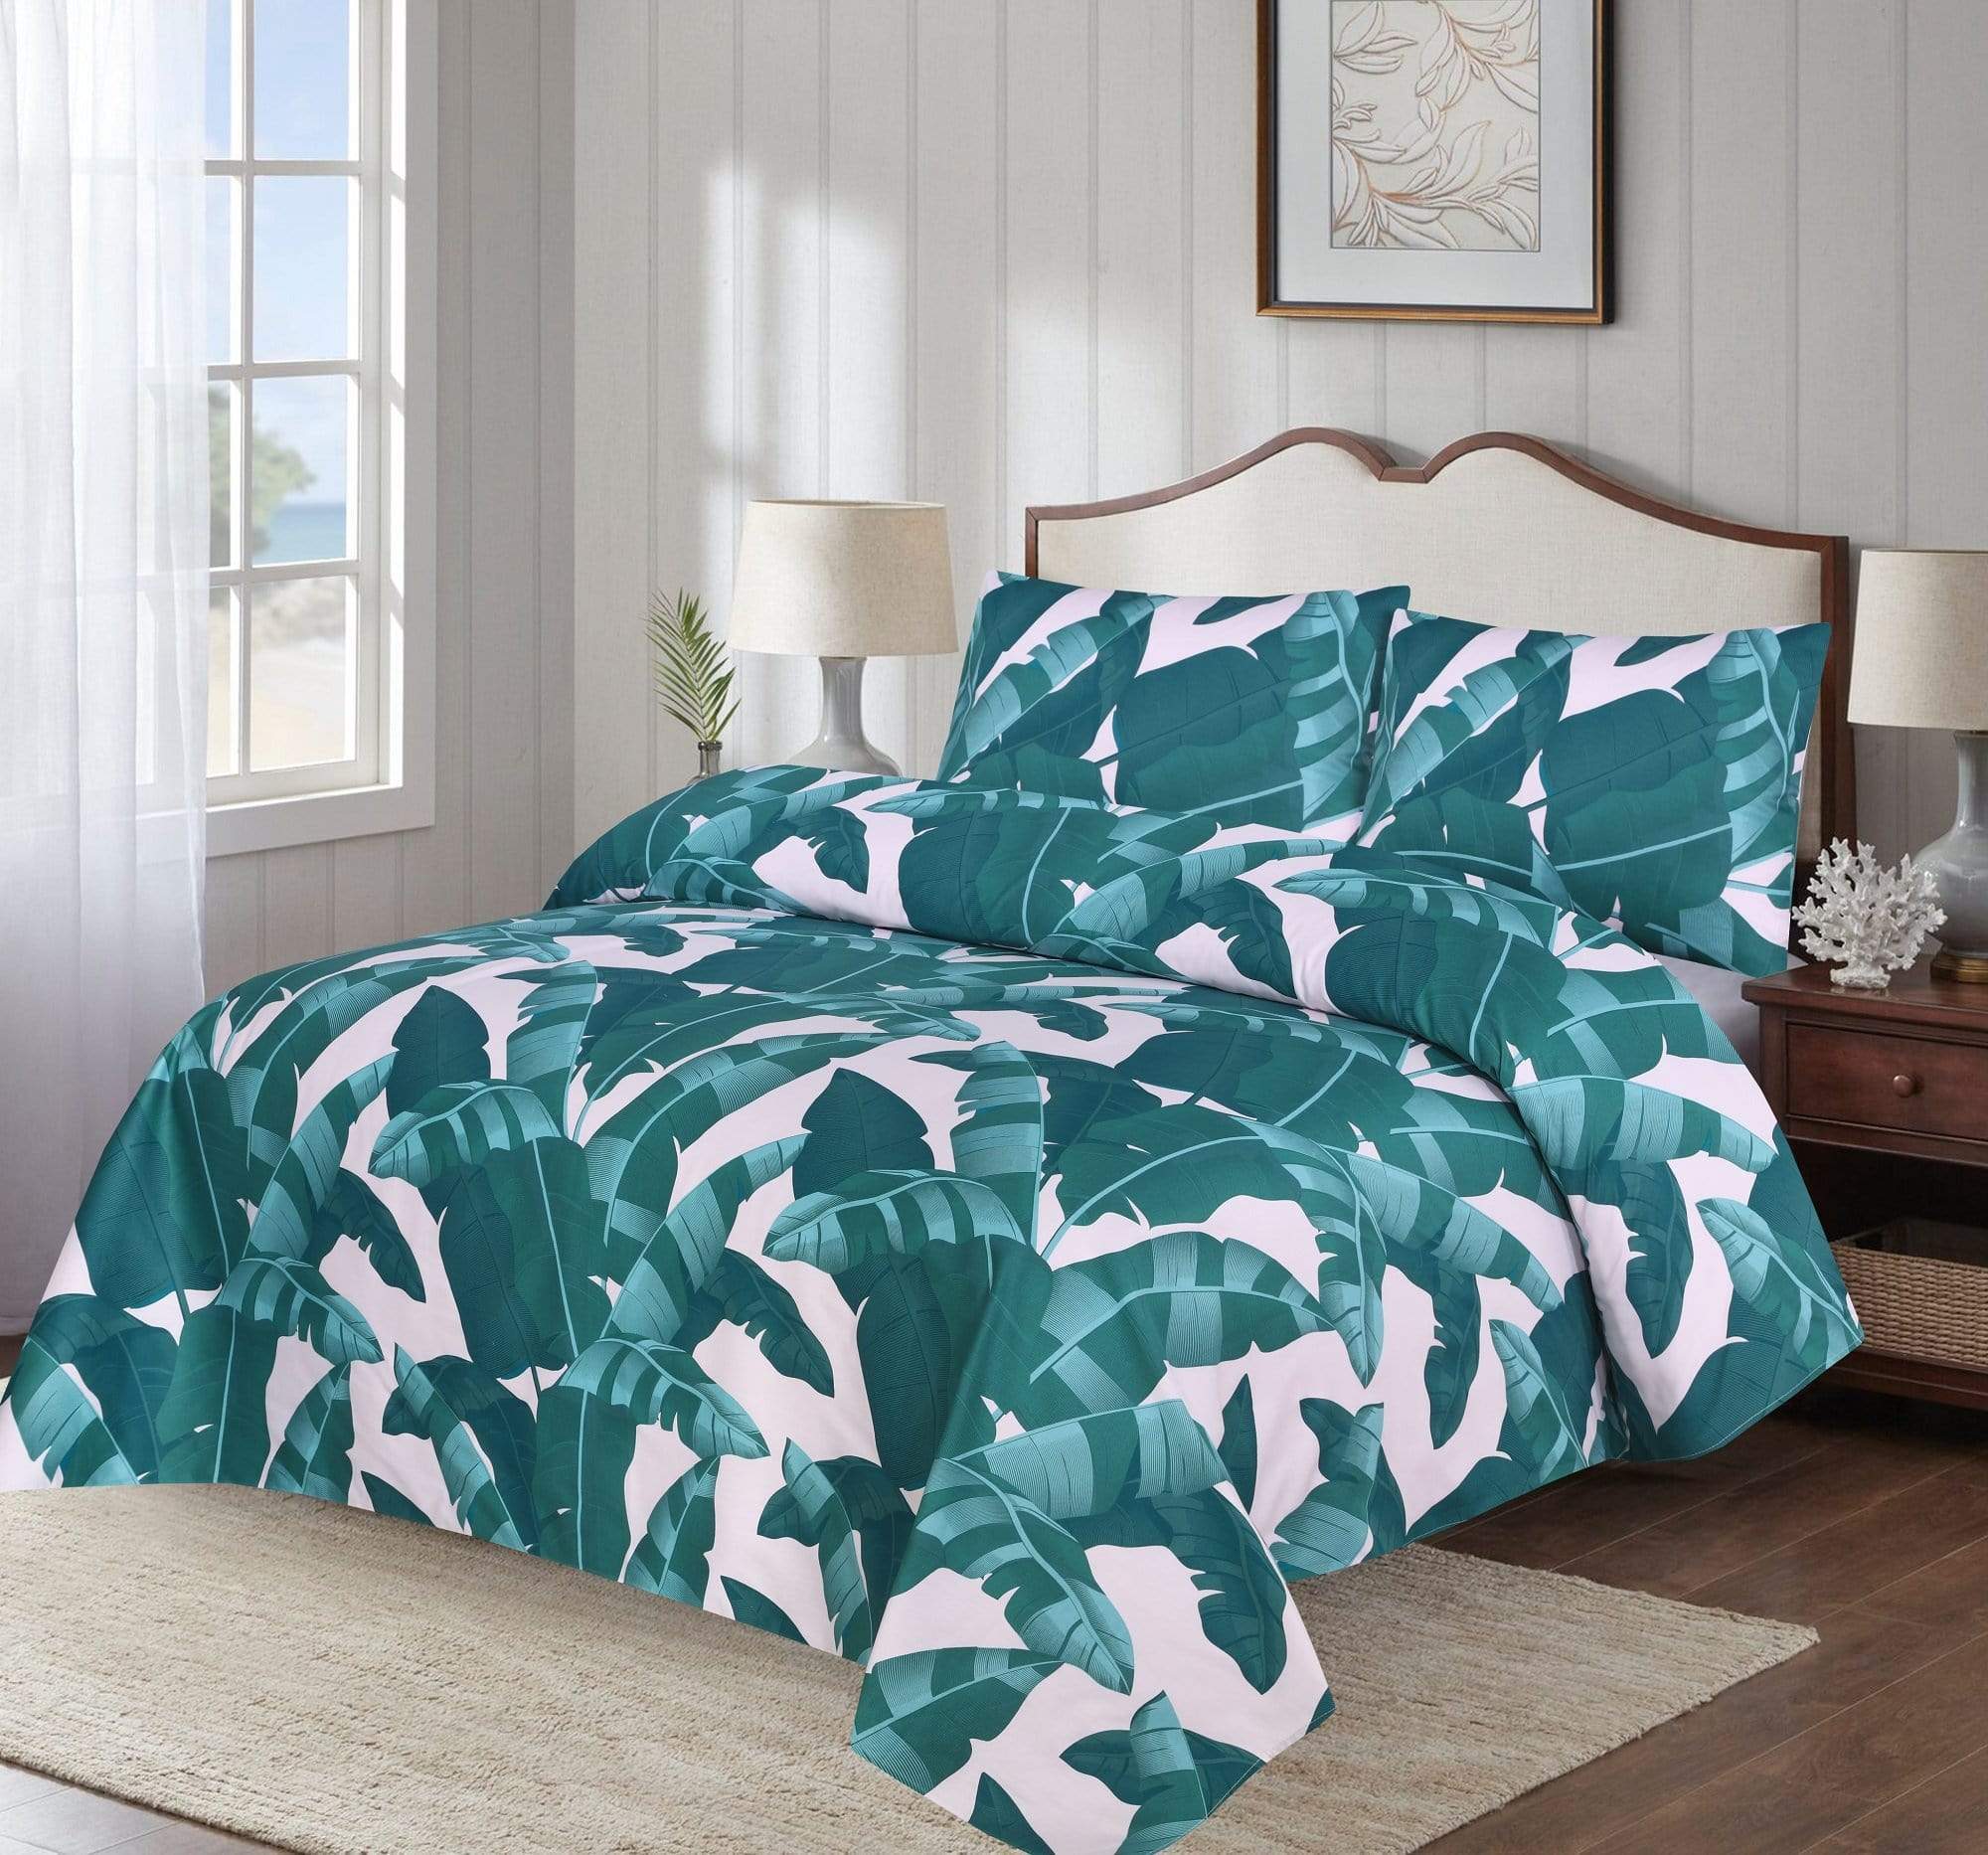 Grace D458-Cotton Satin 6 pc summer Comforter Set with 4 pillow covers